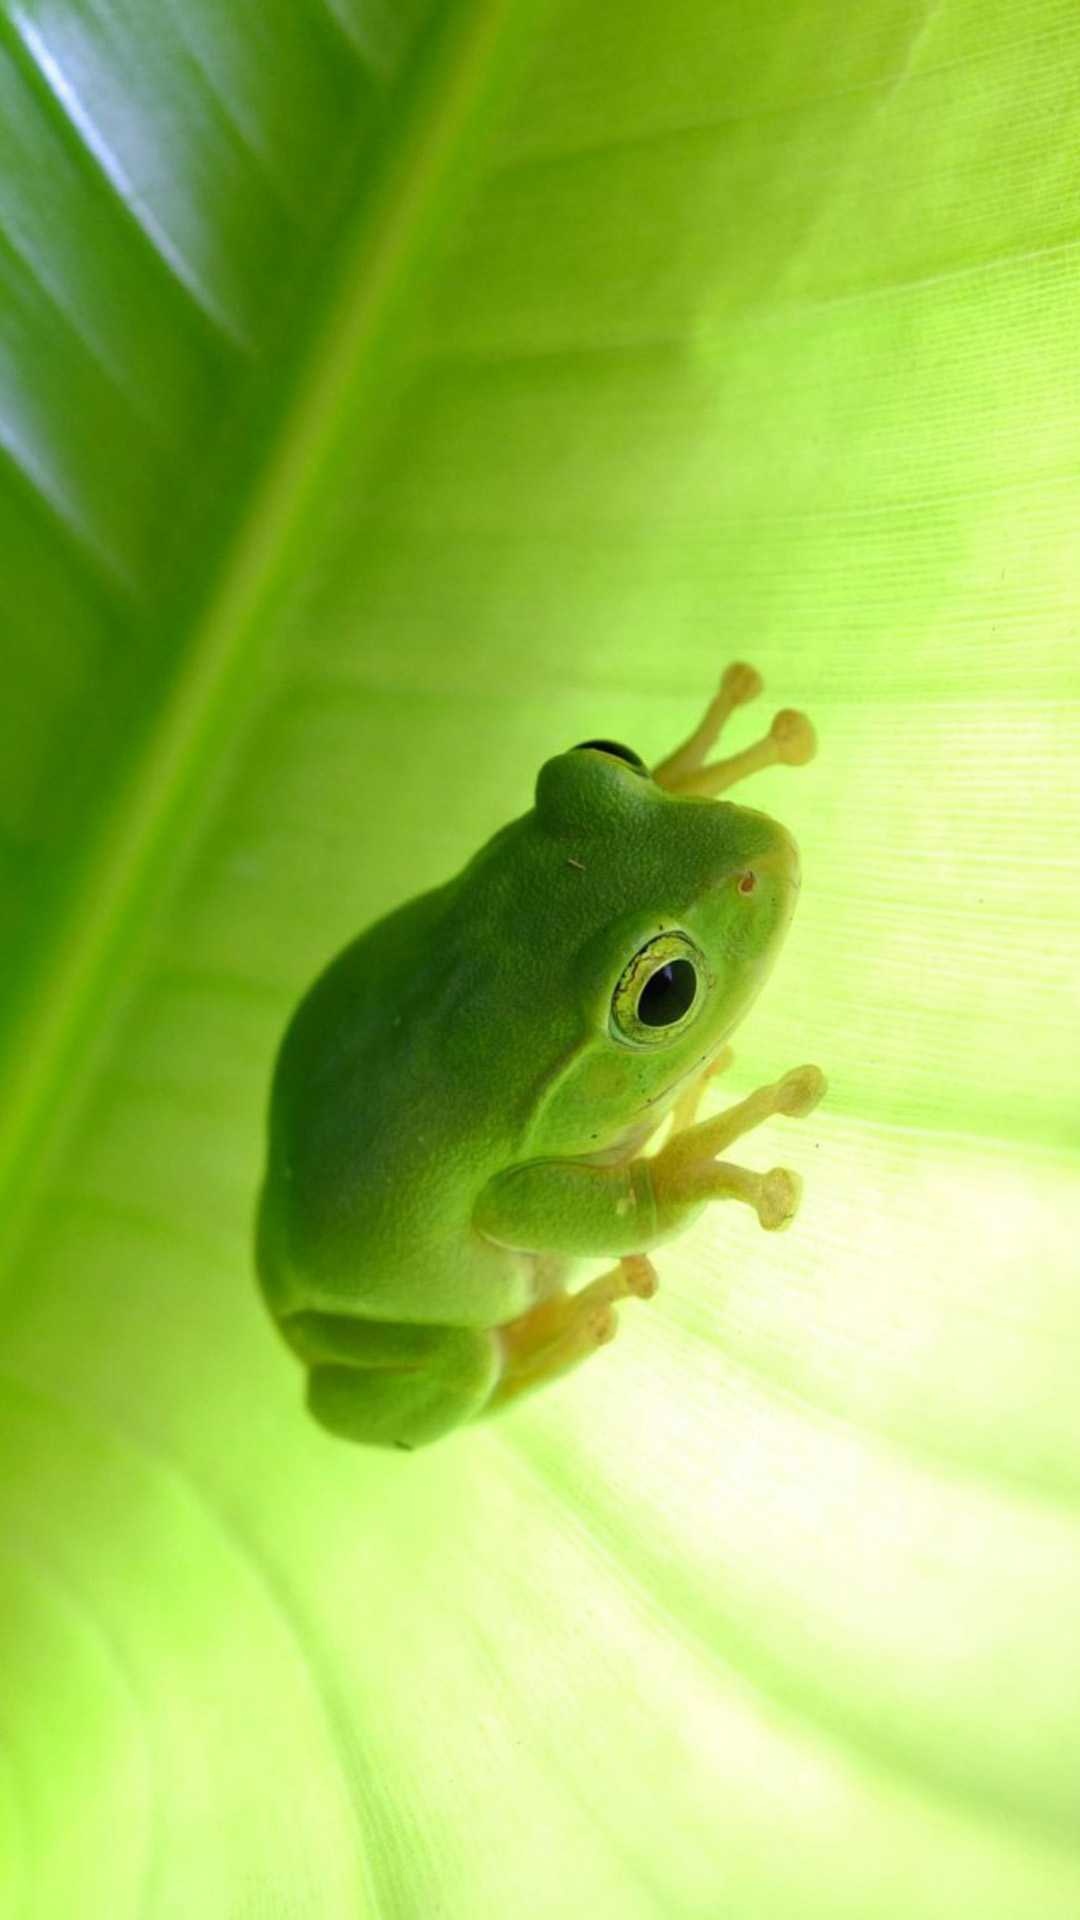 Cute frog wallpaper, Adorable amphibian, Whimsical charm, Smile-inducing, 1080x1920 Full HD Phone